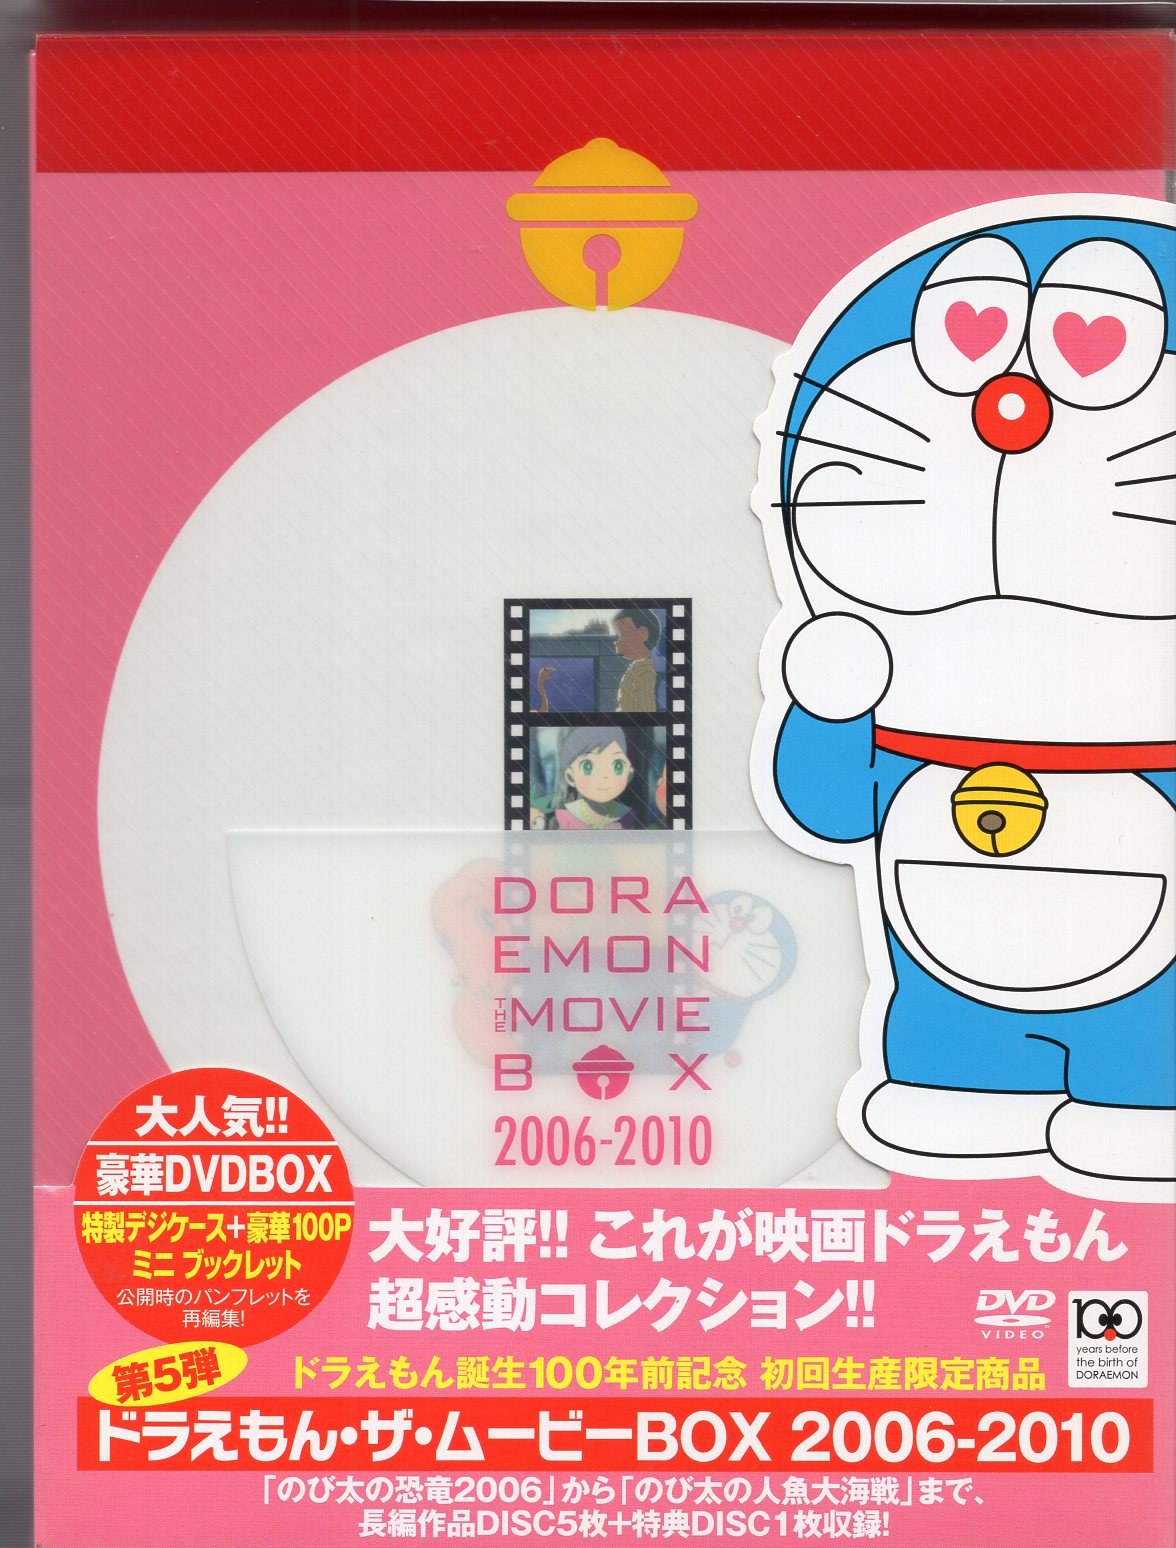 5☆好評 DORAEMON THE MOVIE BOX 2006-2010〈初回限定生産… i9tmg.com.br